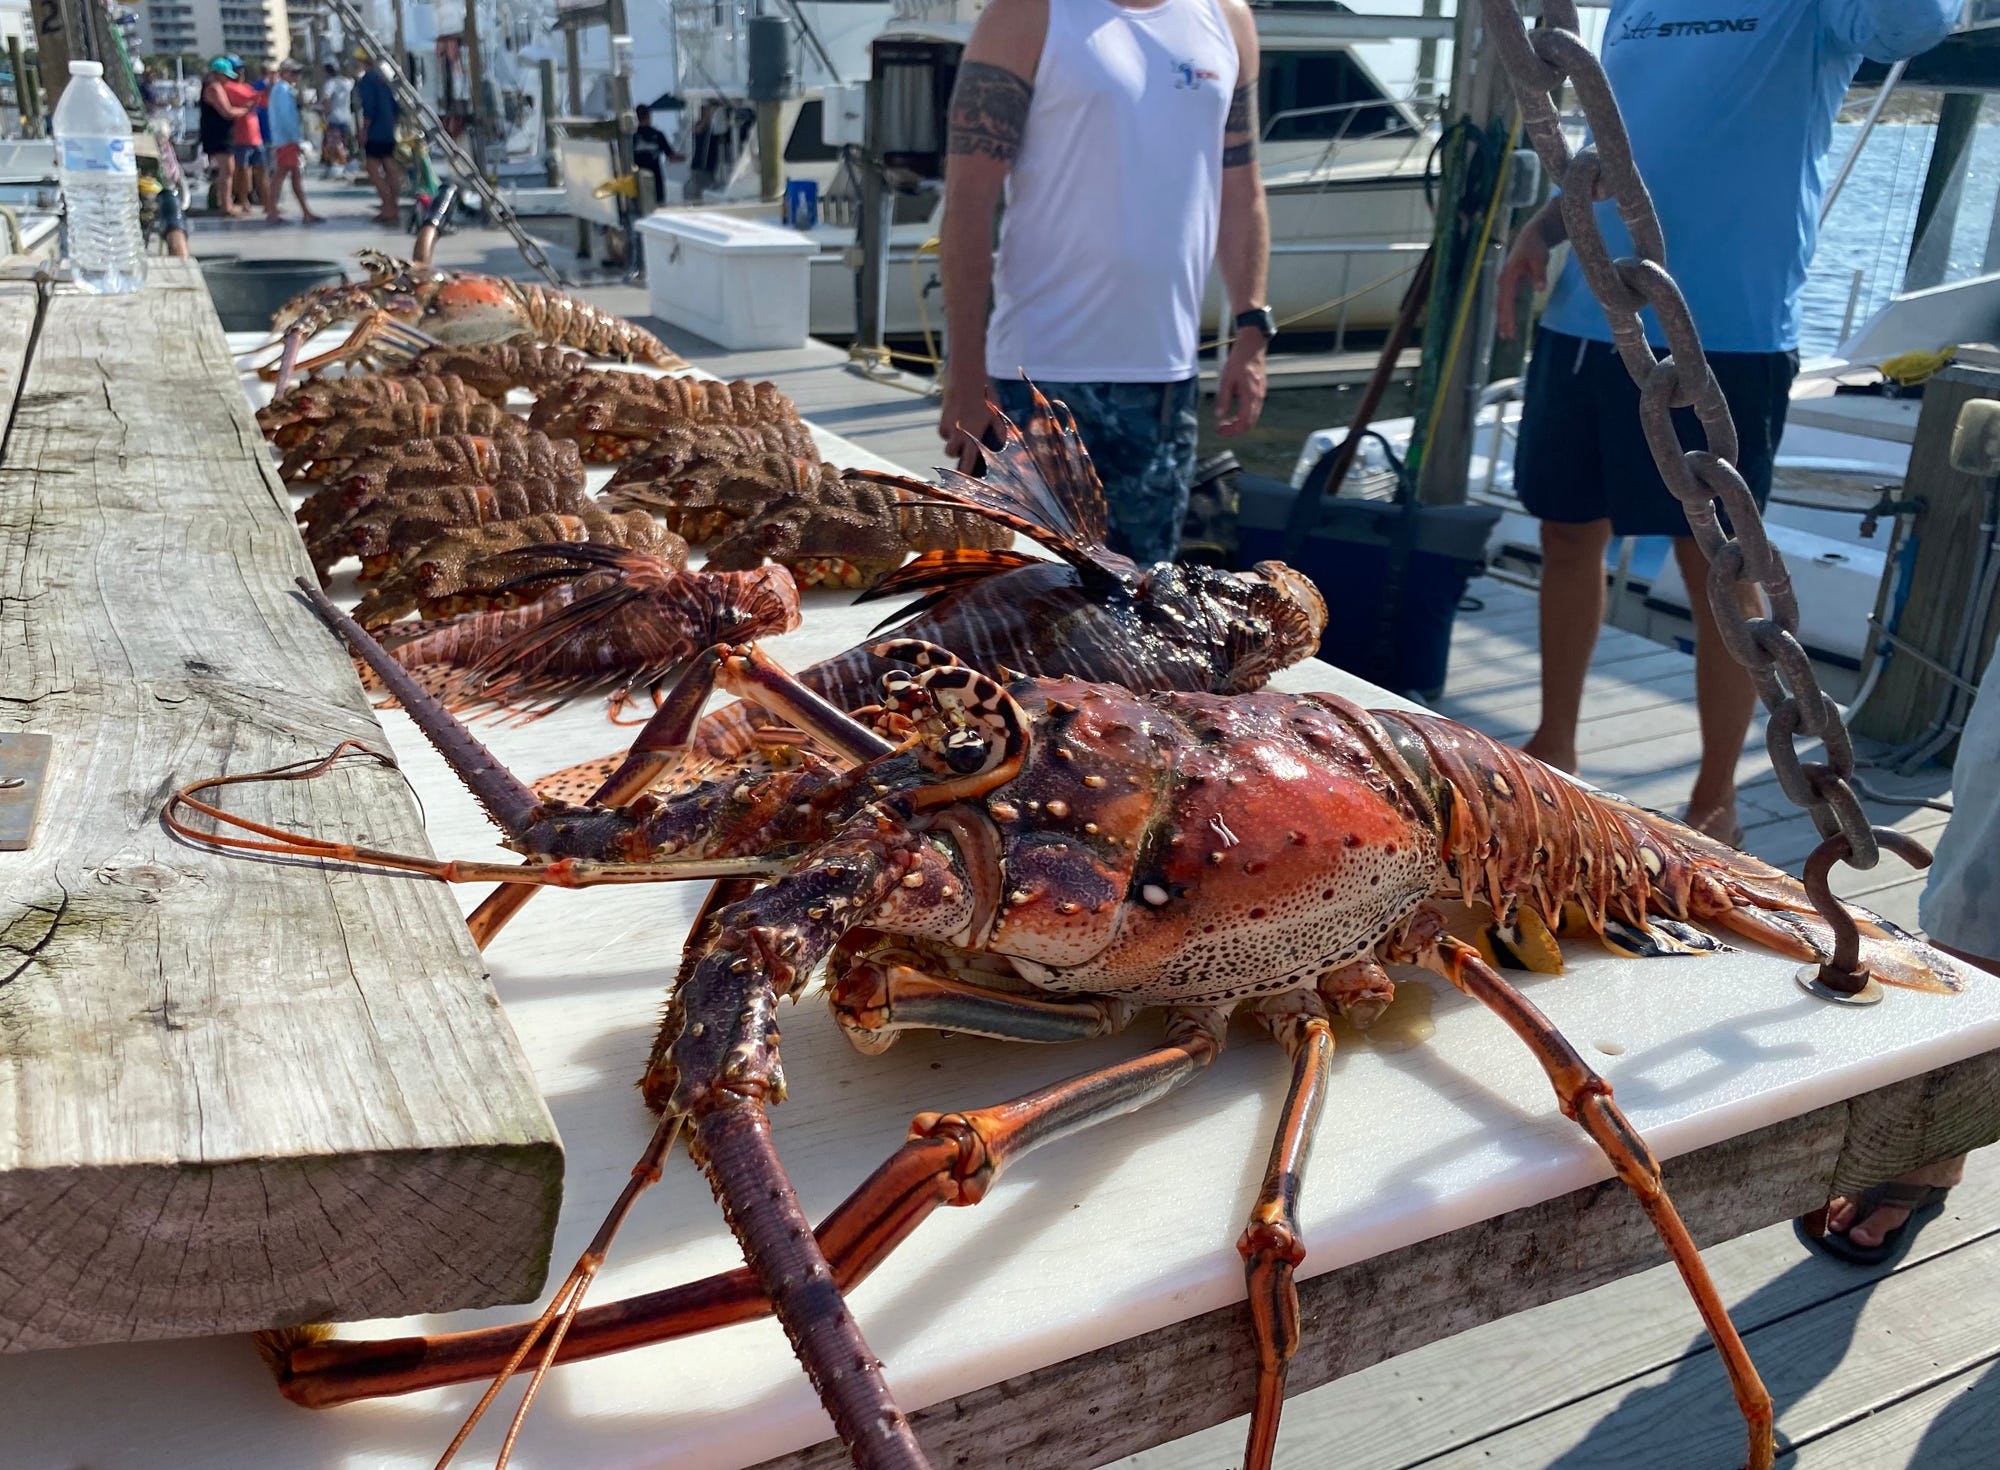 Spiny lobster season starts soon